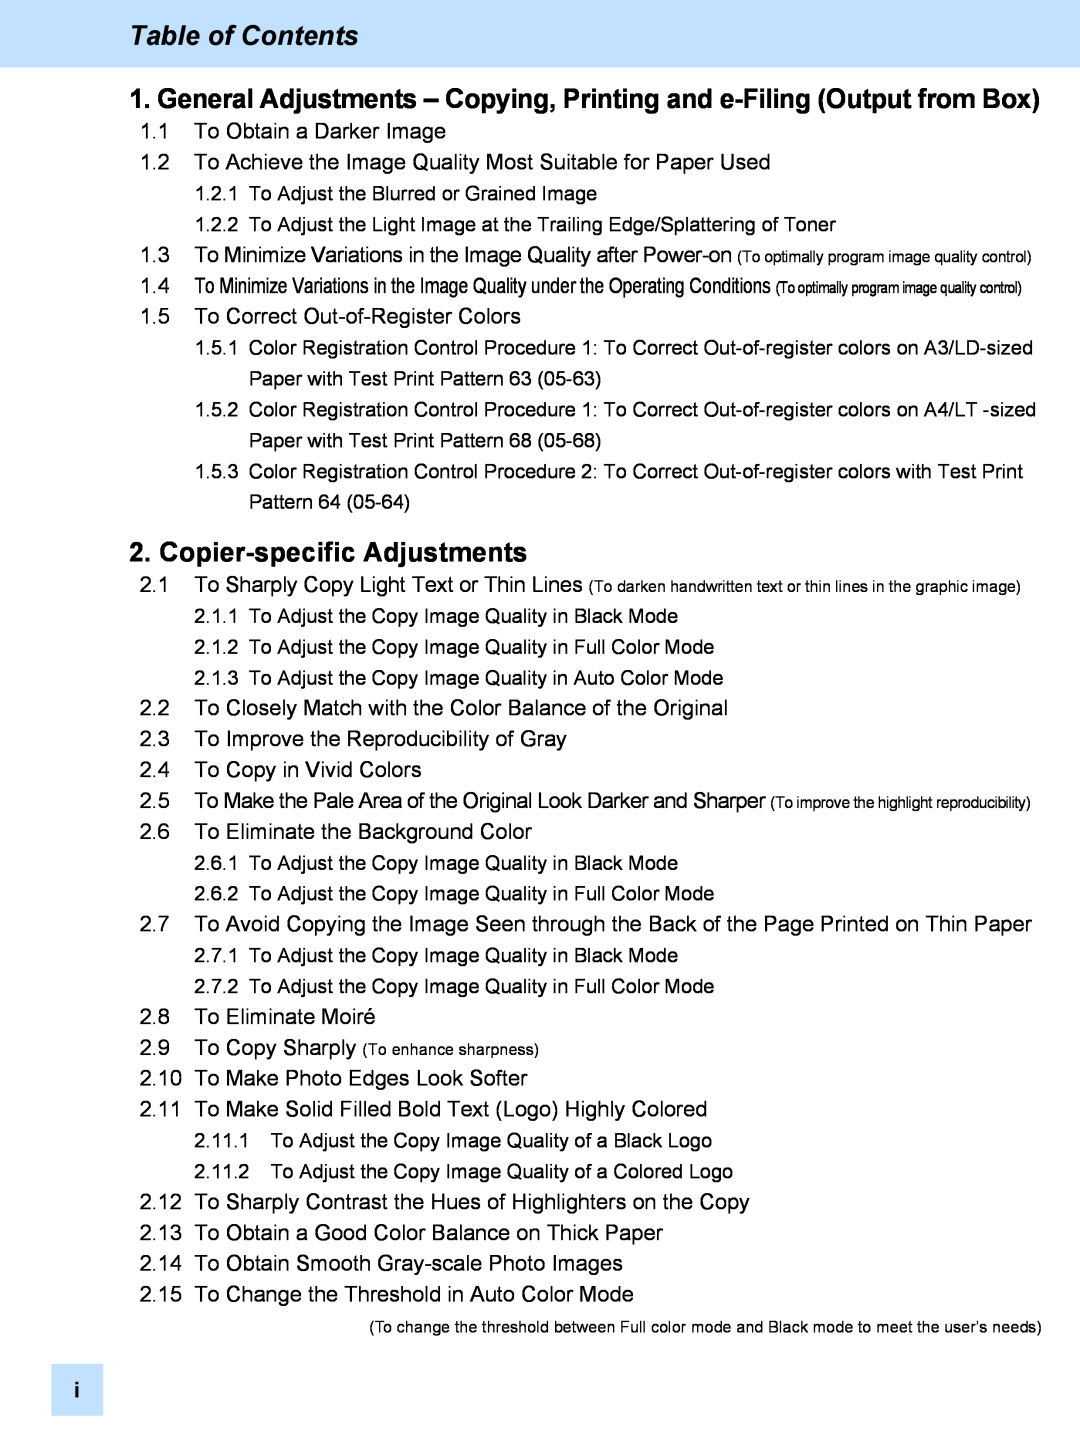 Toshiba 451C, 351C, e-STUDIO281c manual Table of Contents, Copier-specific Adjustments 